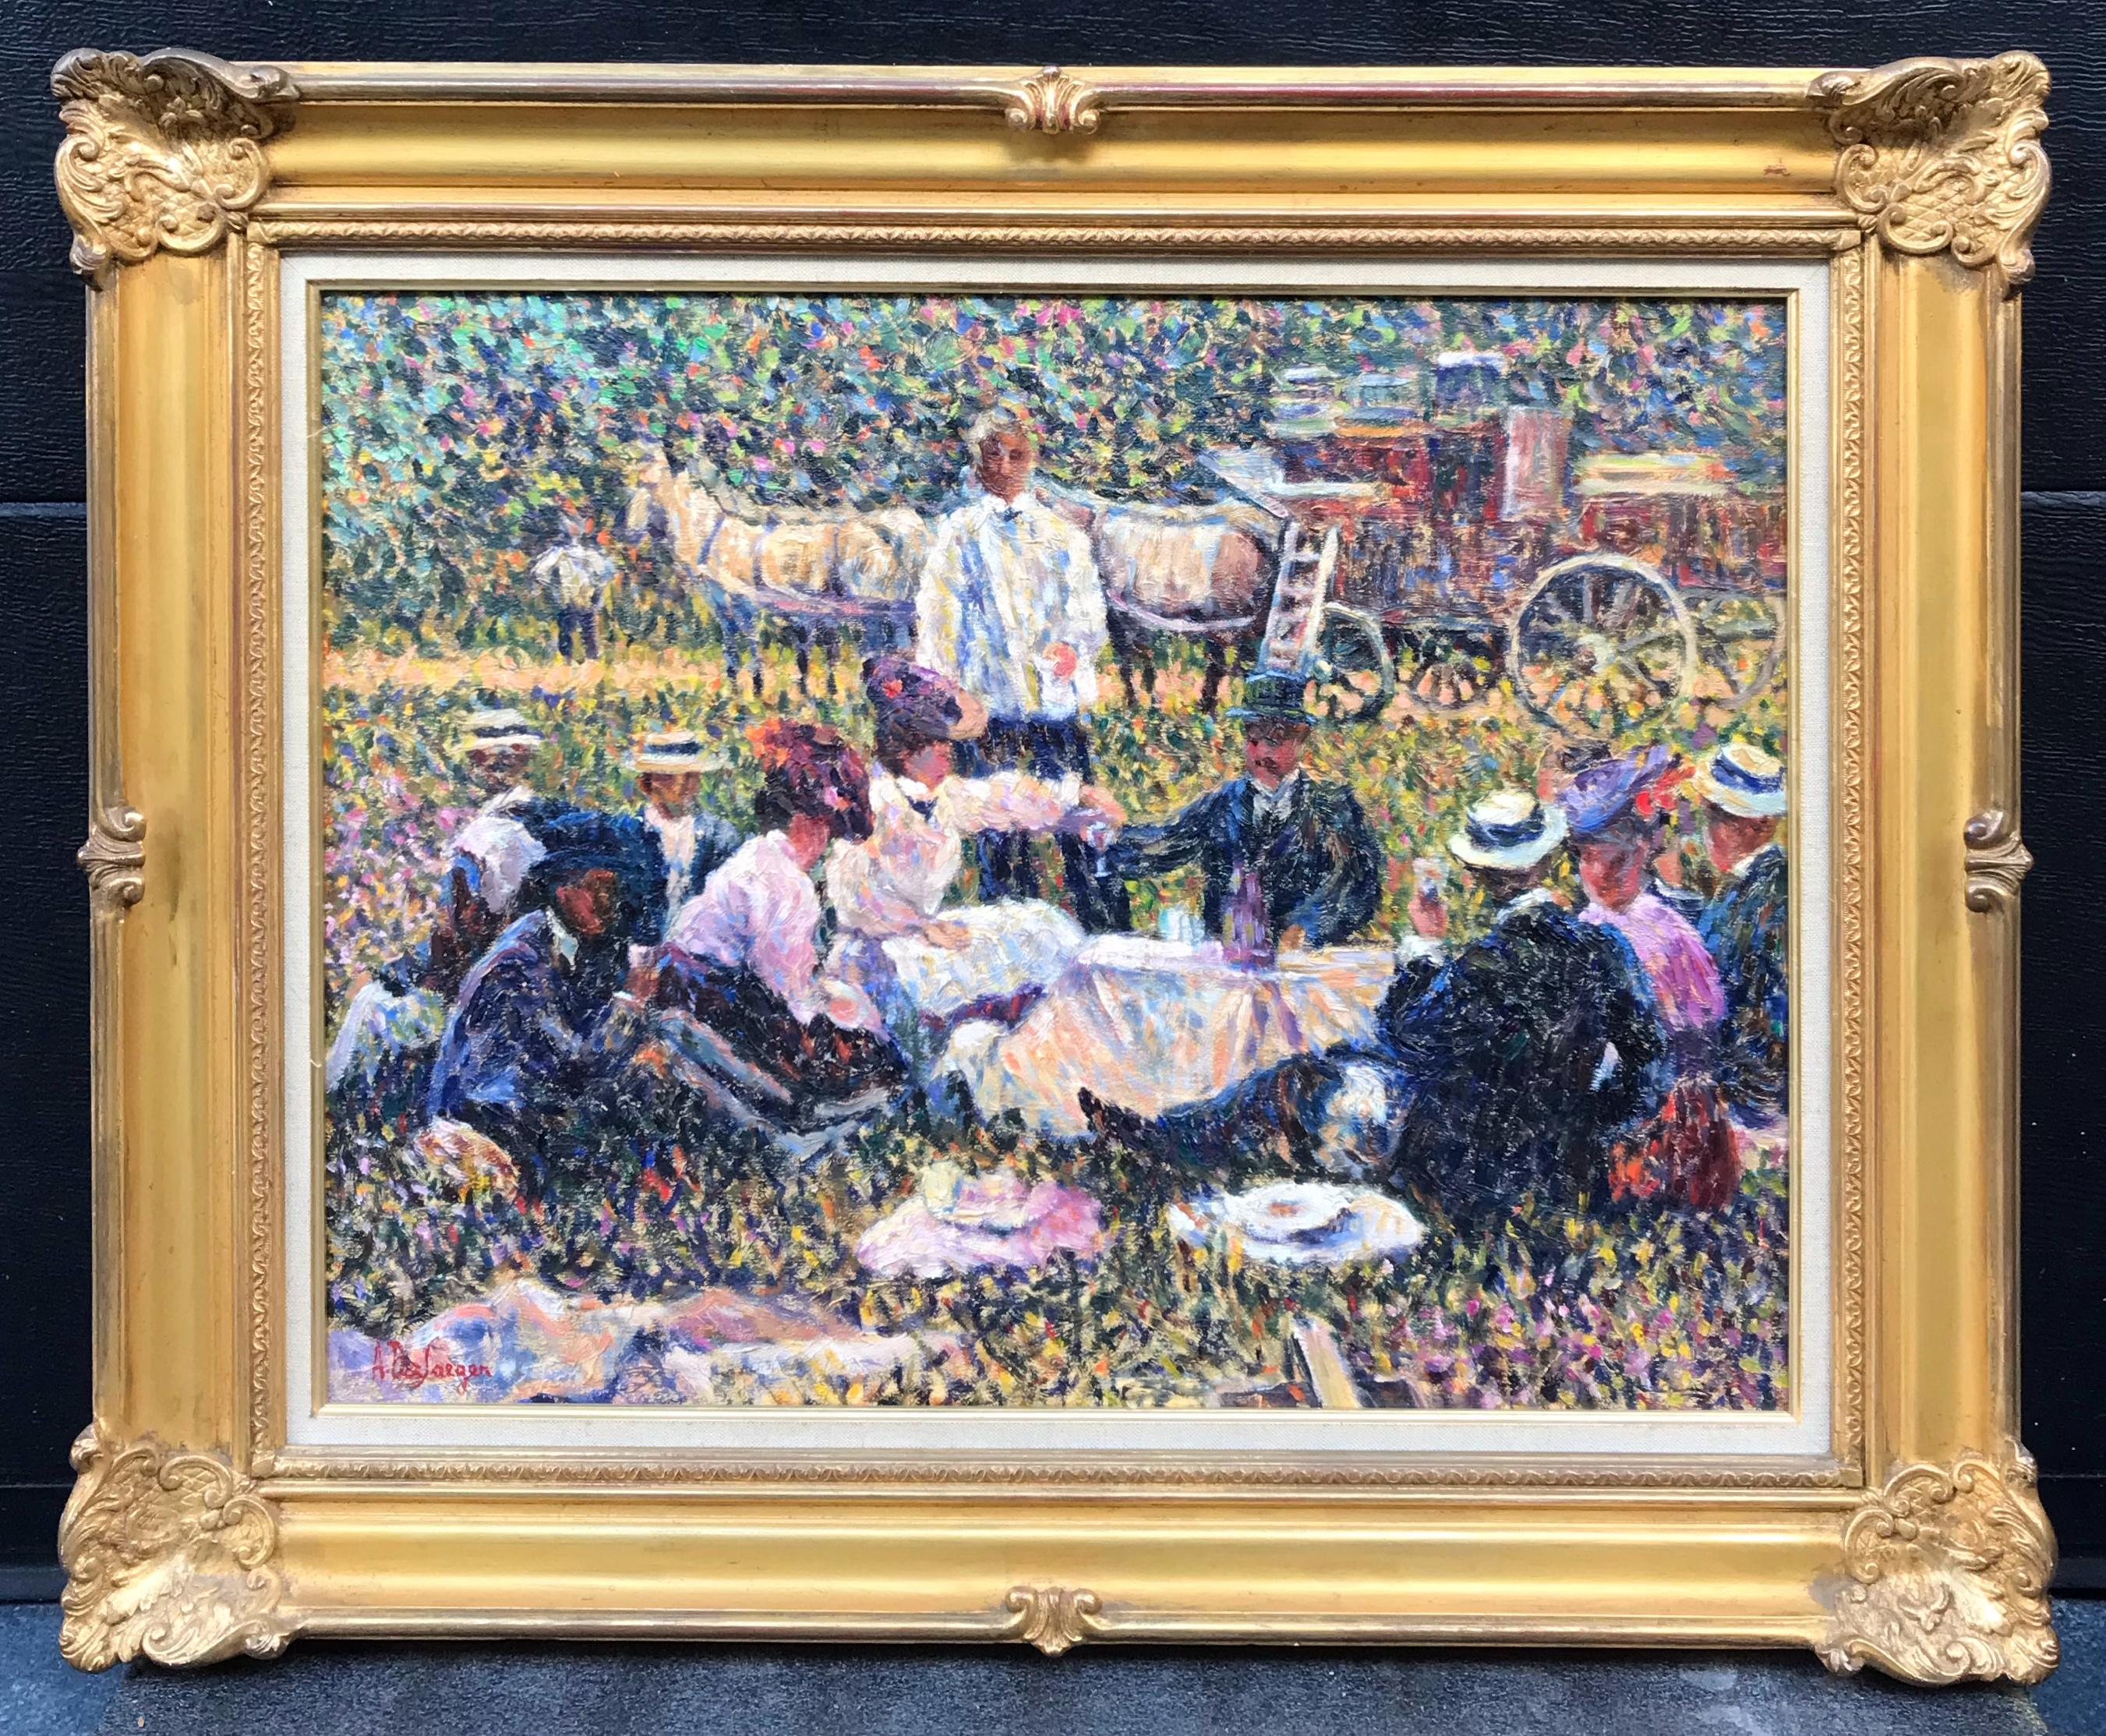 Anne de Saeger Portrait Painting – Lunch On The Grass – Postimpressionistisches Gemälde